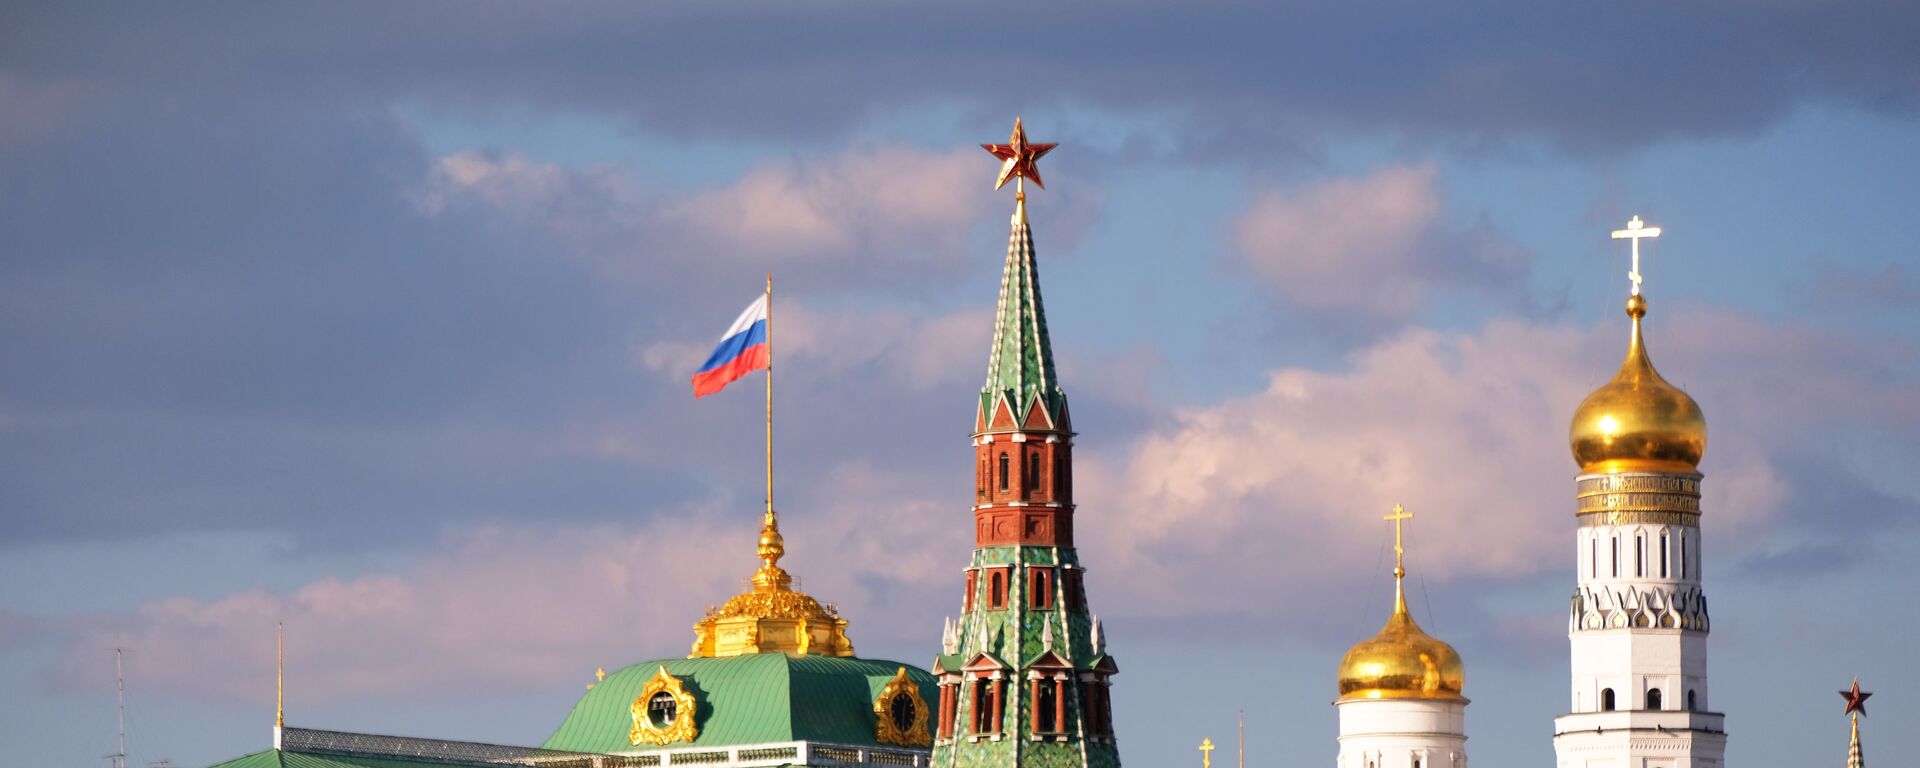 El Kremlin de Moscú - Sputnik Mundo, 1920, 17.06.2019